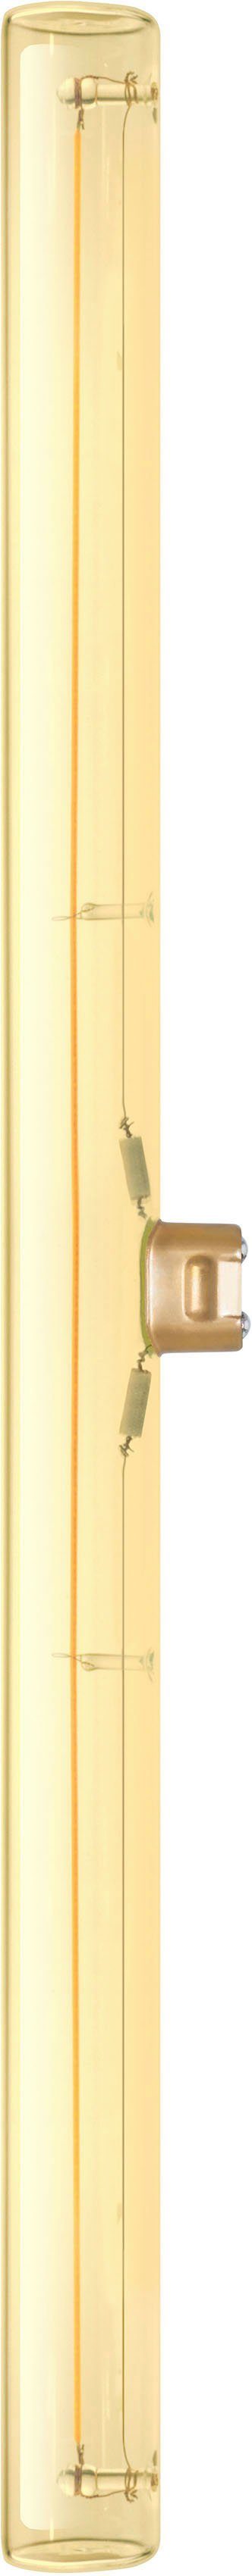 SEGULA LED-Leuchtmittel LED Linienlampe S14d 500mm gold, S14d, 1 St., Extra-Warmweiß, LED Linienlampe S14d 500mm gold, 2200K, 4,5W, CRI 90, dimmbar